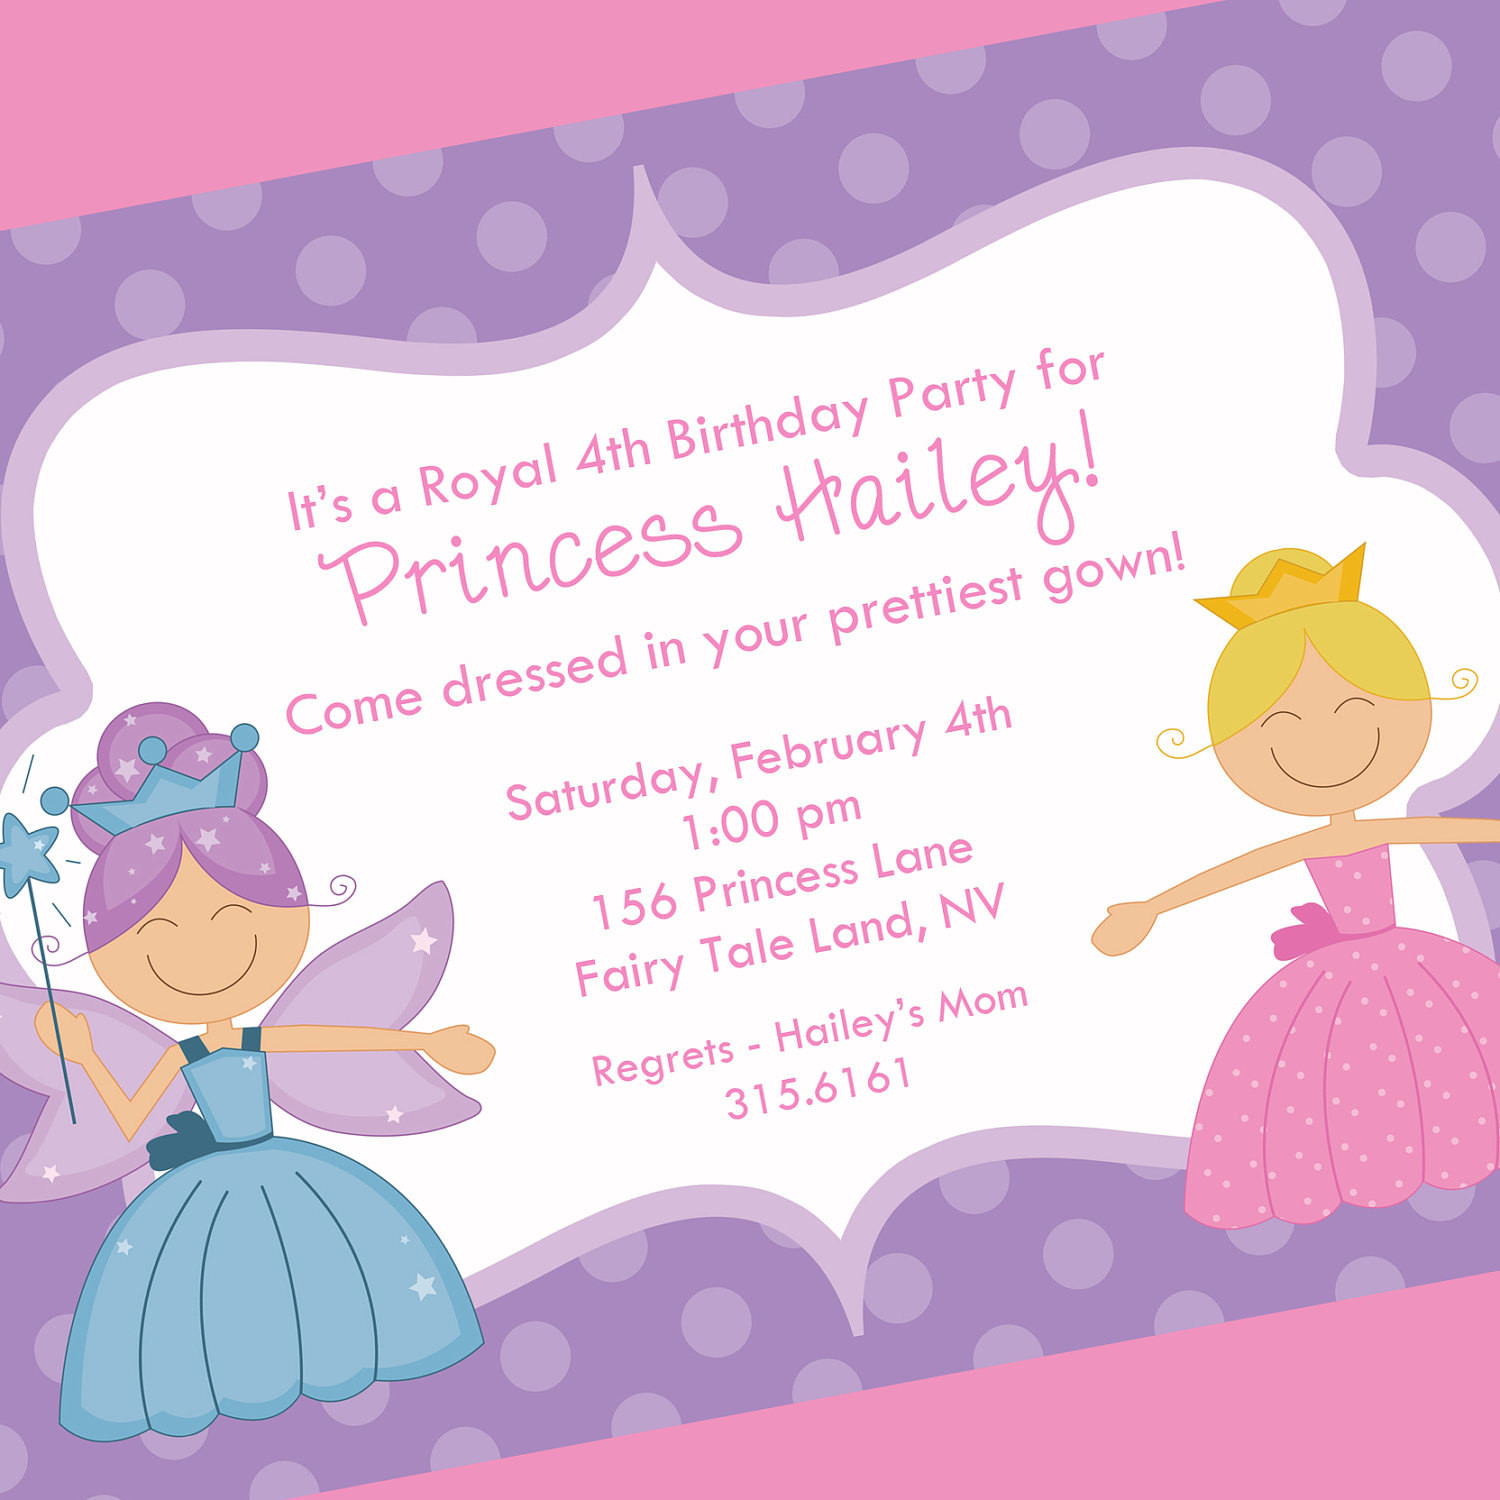 Best ideas about Princess Birthday Invitations
. Save or Pin Princess Birthday Invitation Printable Invitation Design Now.